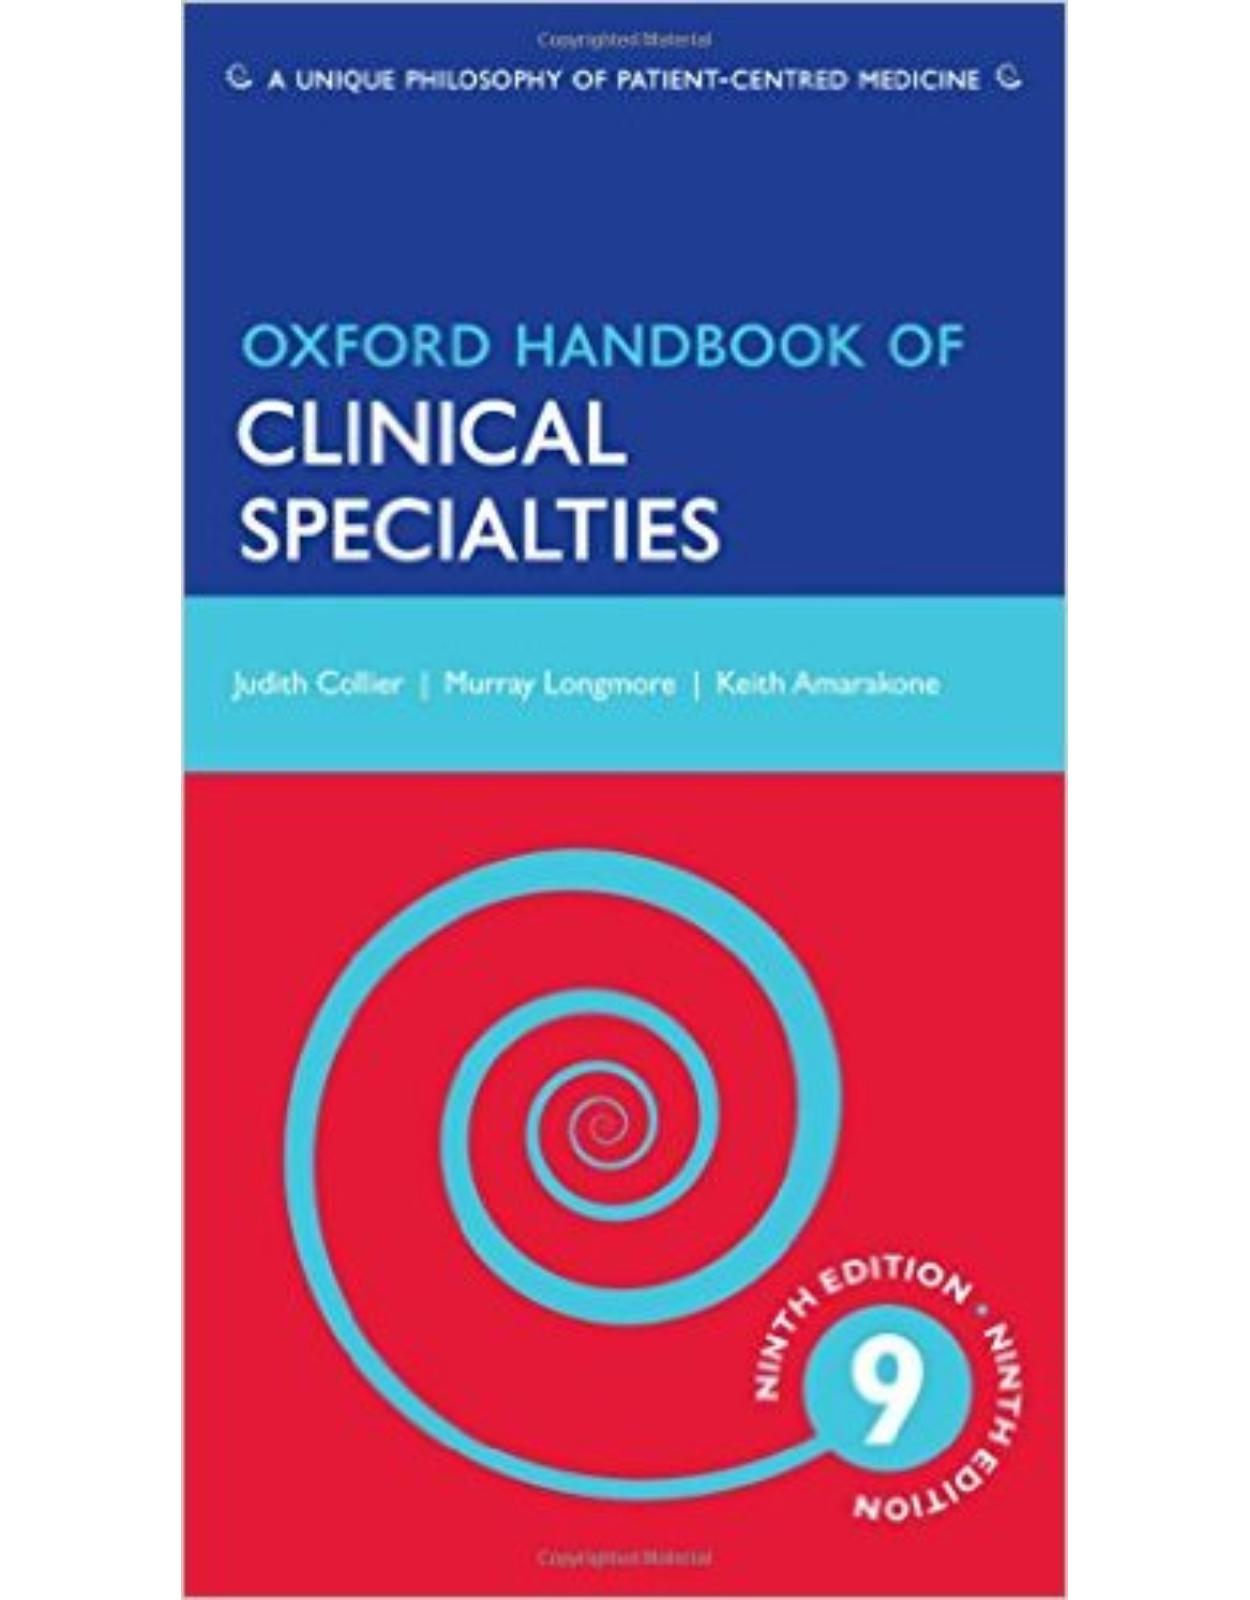 Oxford Handbook of Clinical Specialties 9e